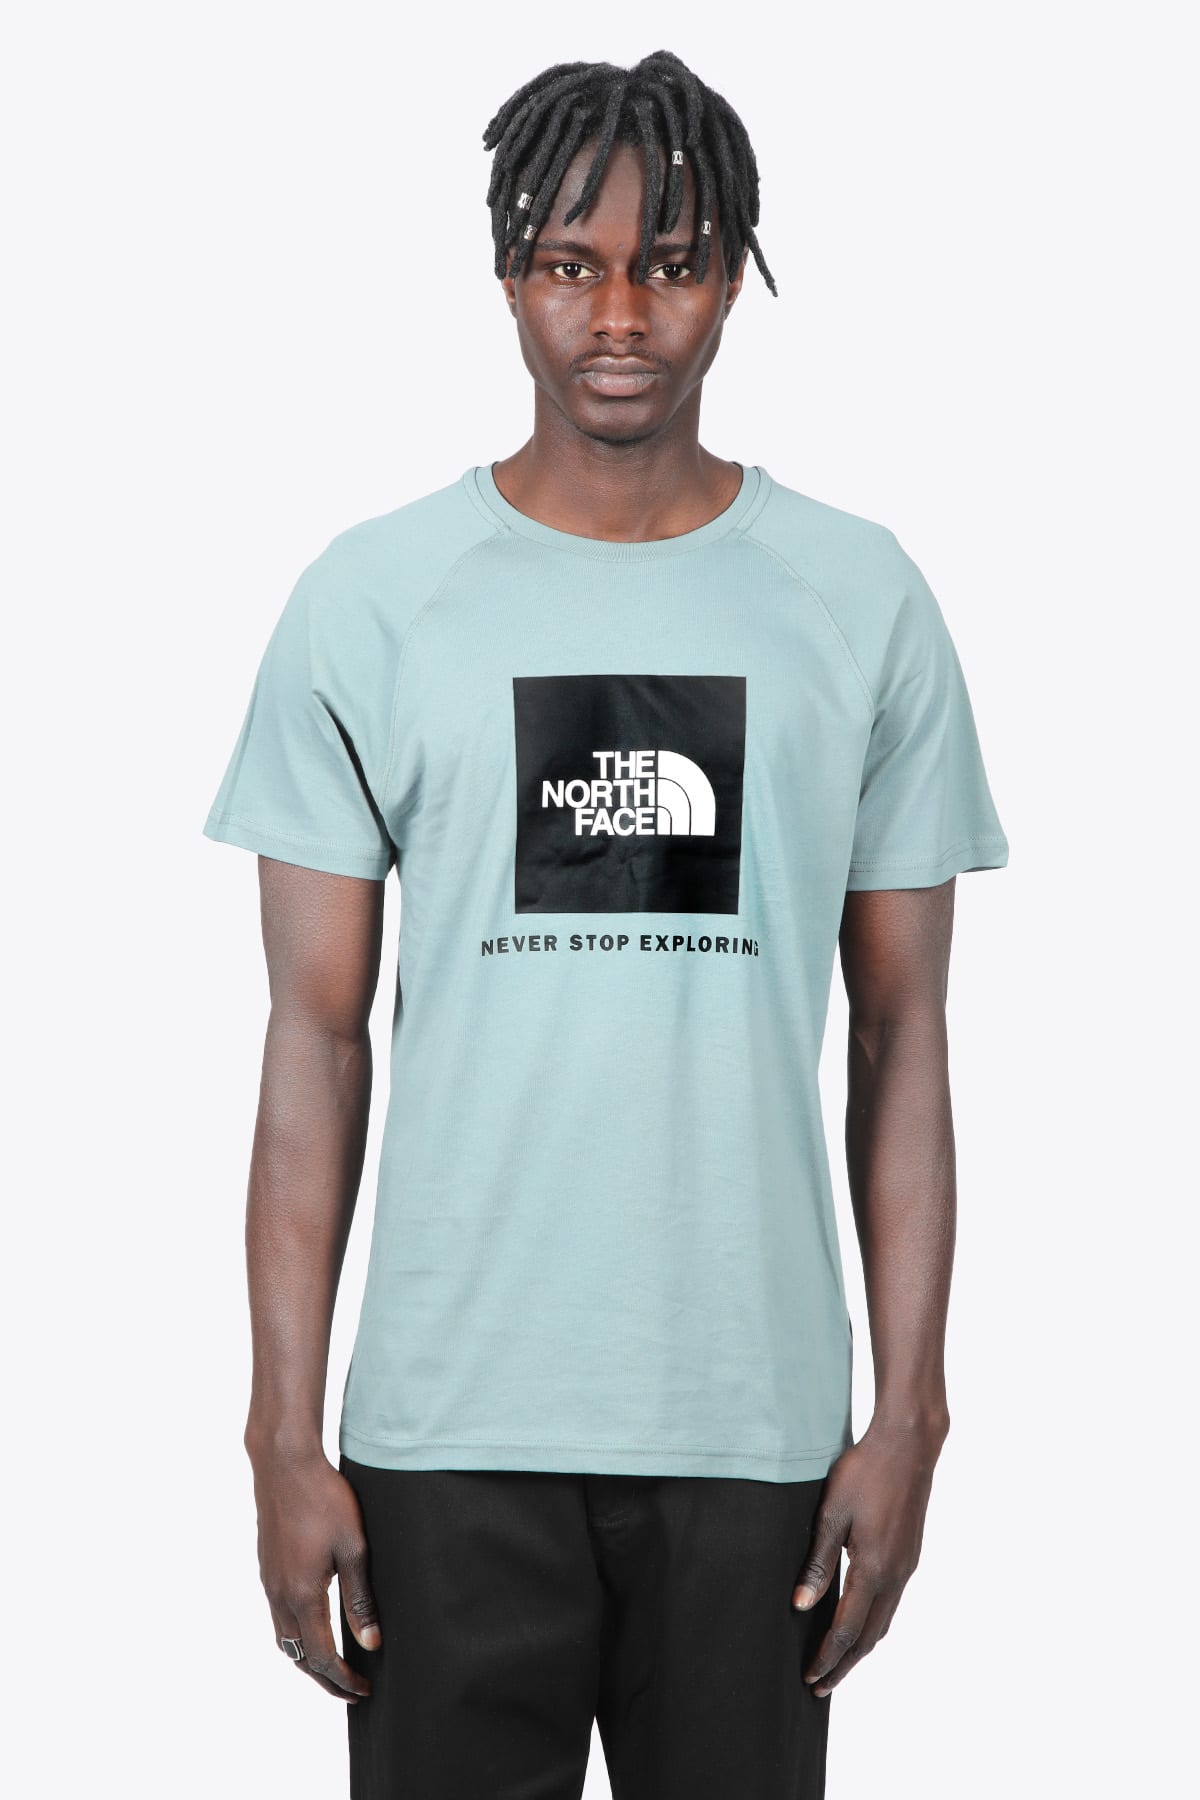 The North Face M S/s/ Raglan Redbox Tee Sage green cotton raglan sleeves t-shirt